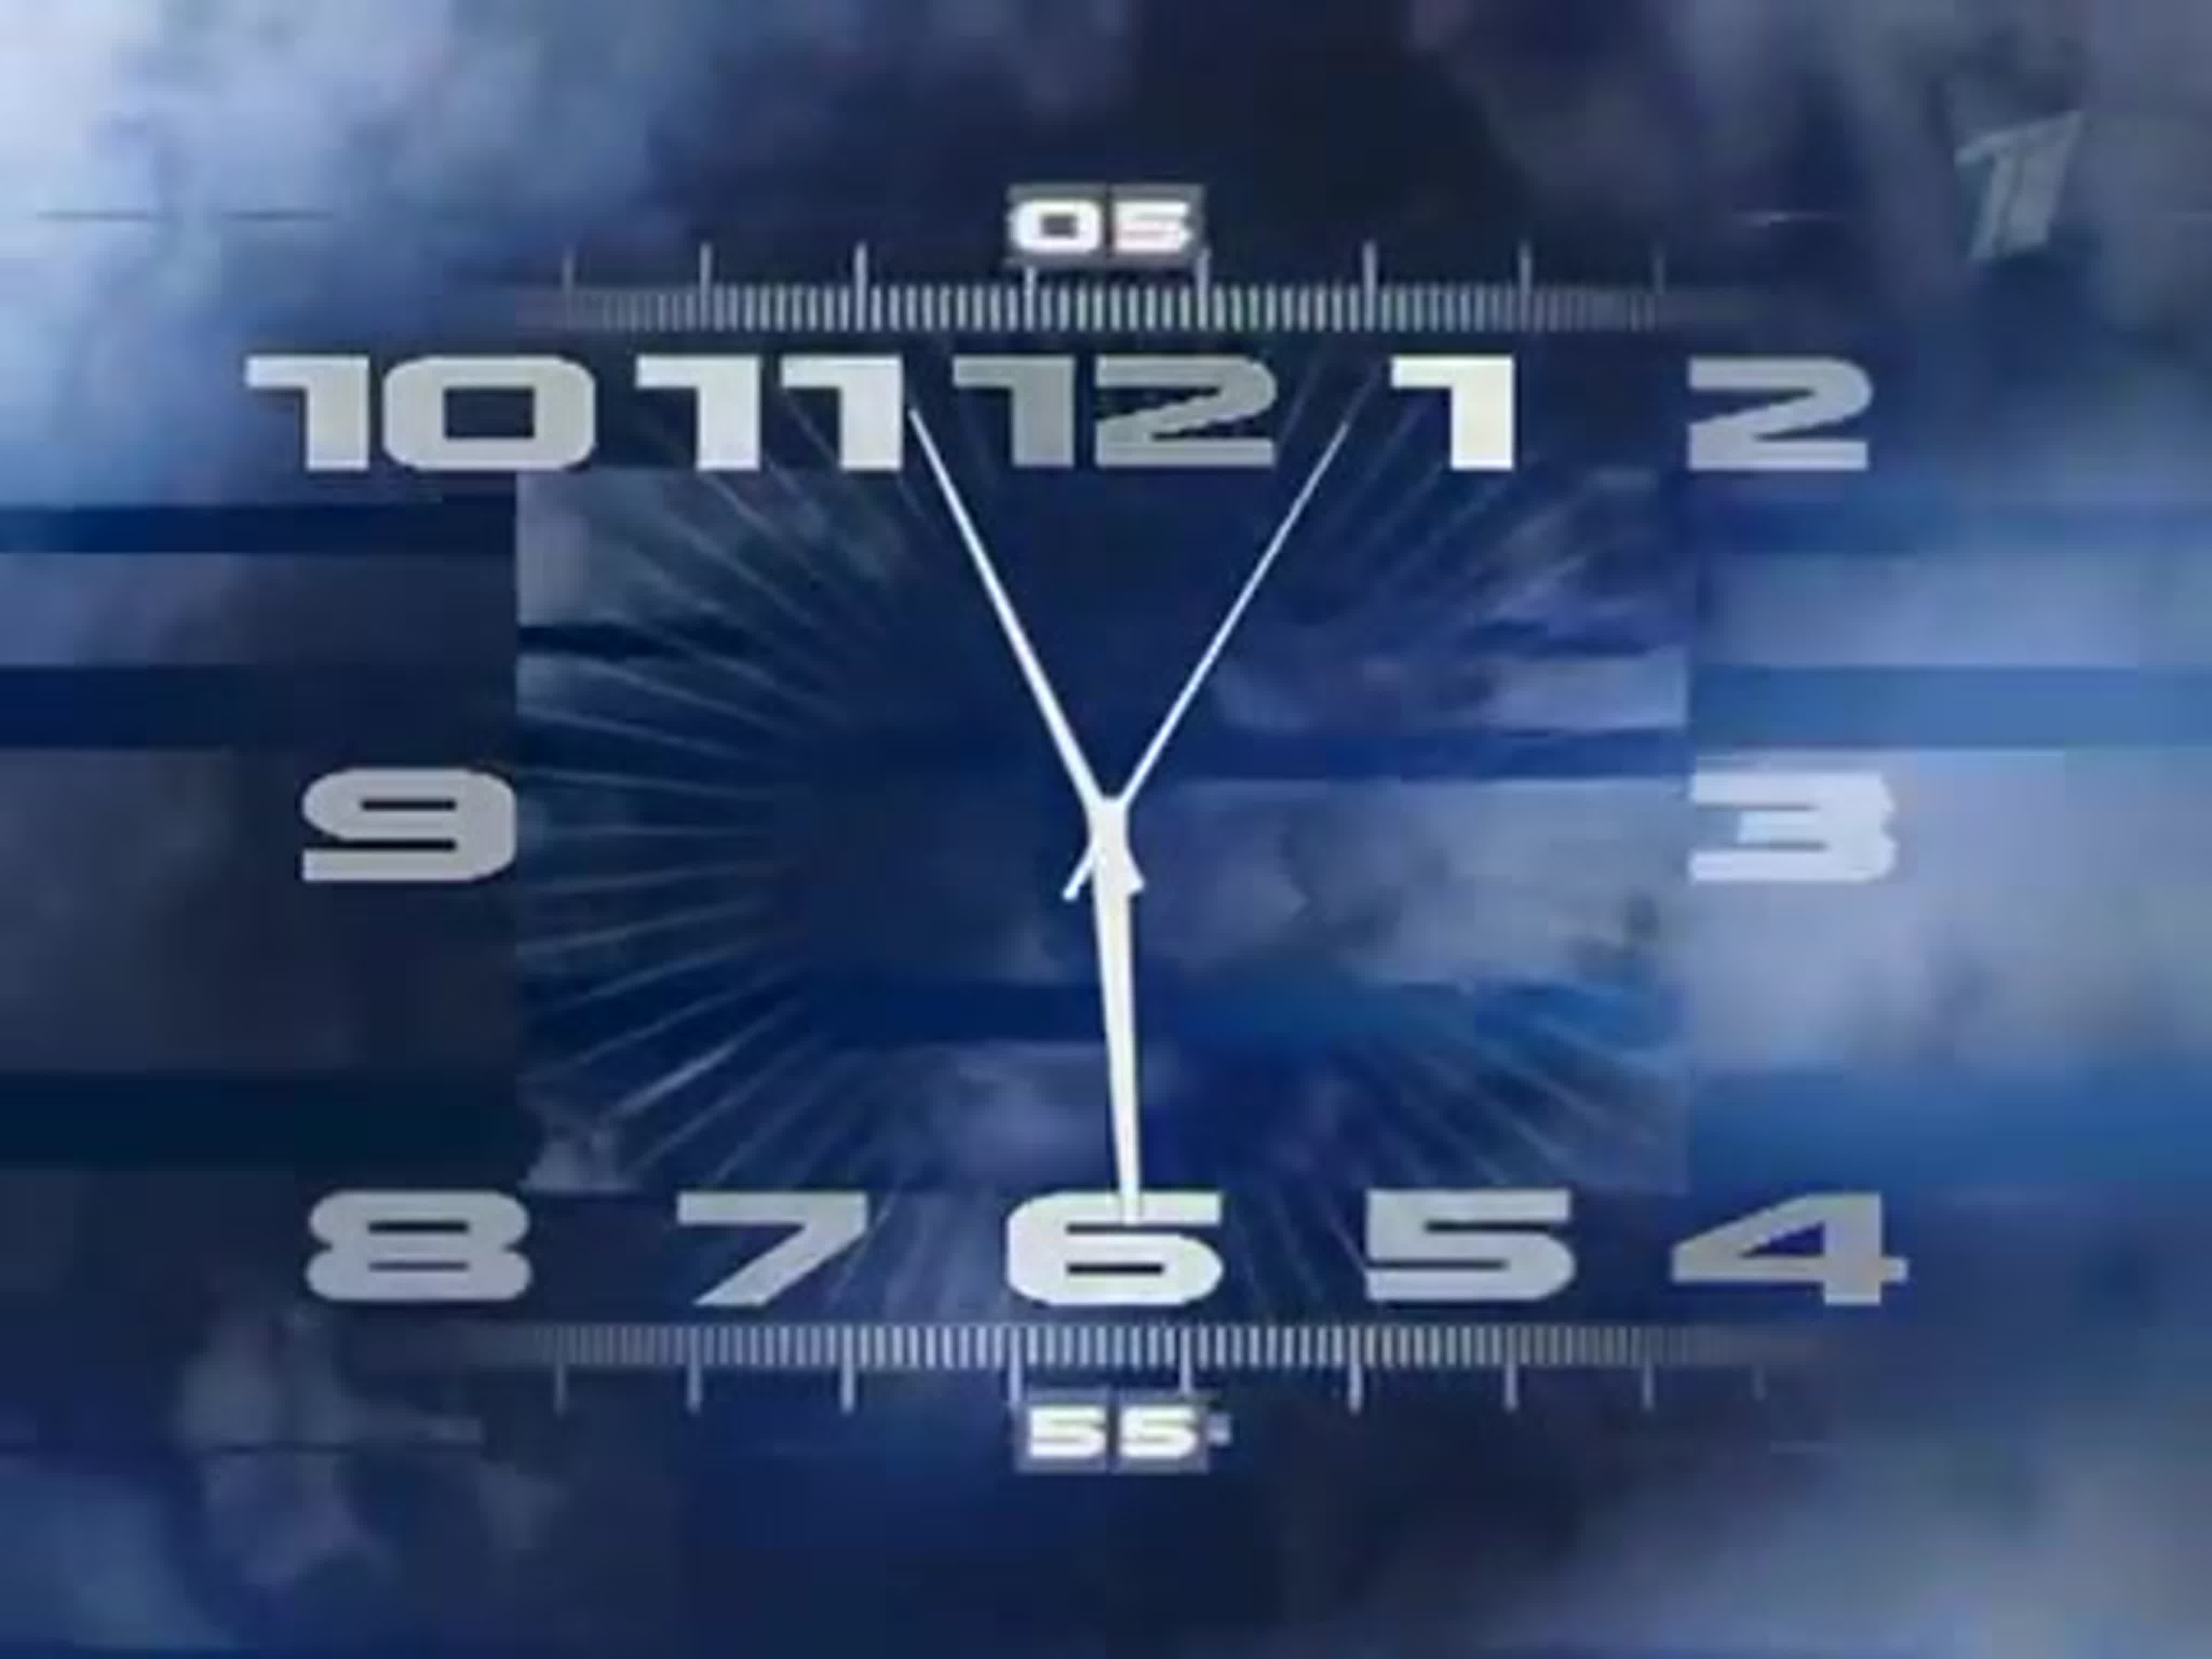 Часы 1 канала время. Часы первого канала 2011. Часы первый канал. Часы ТВС со звуком часов 1 канала. Часы первого канала в эффектах.